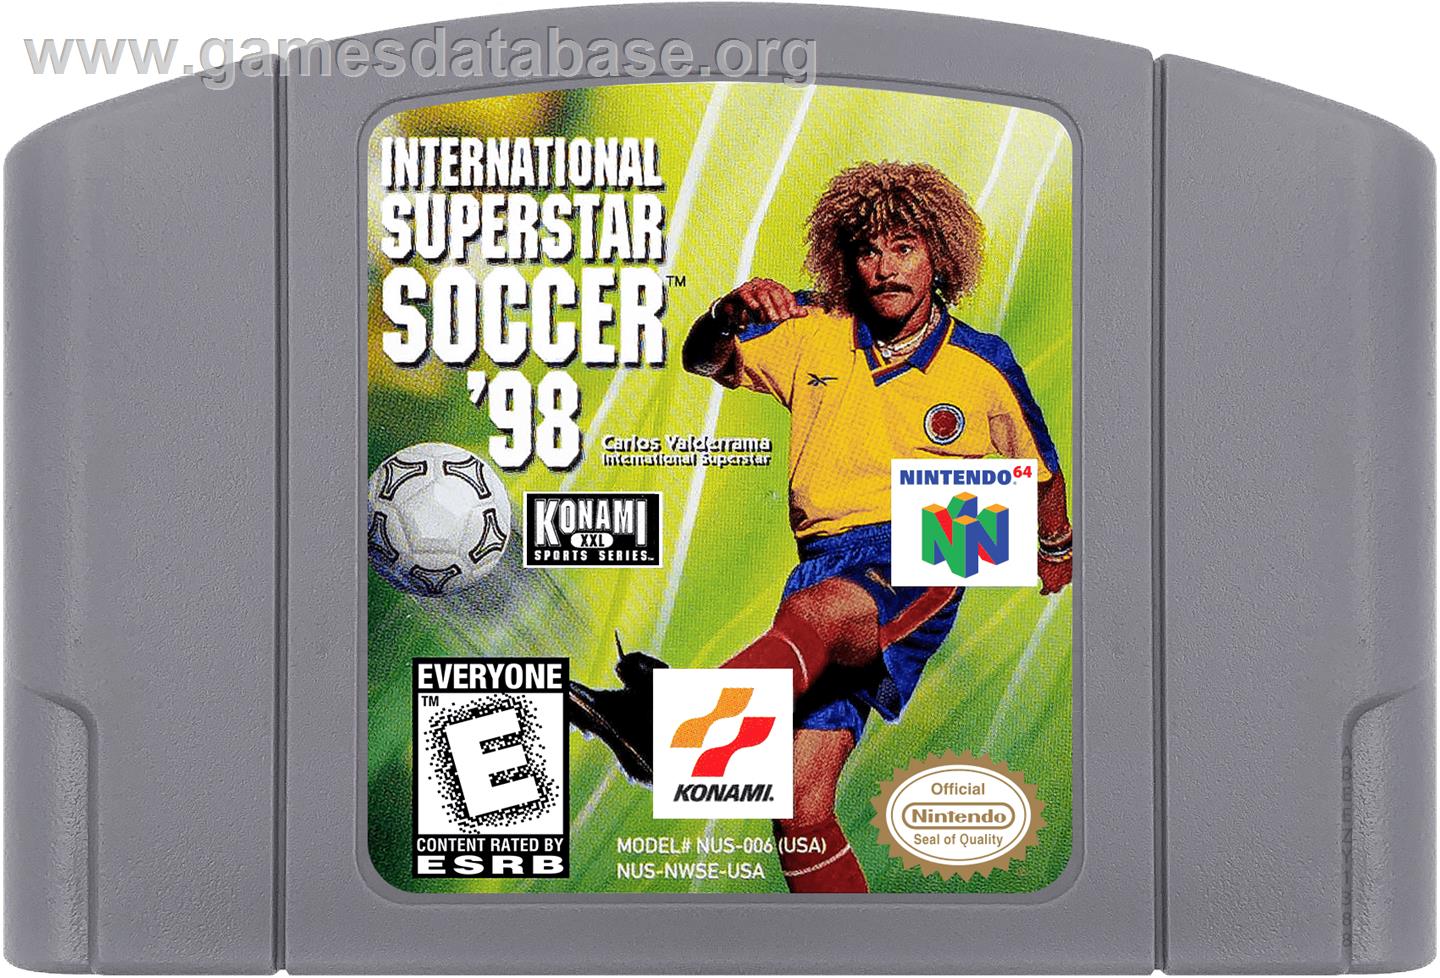 International Superstar Soccer '98 - Nintendo N64 - Artwork - Cartridge